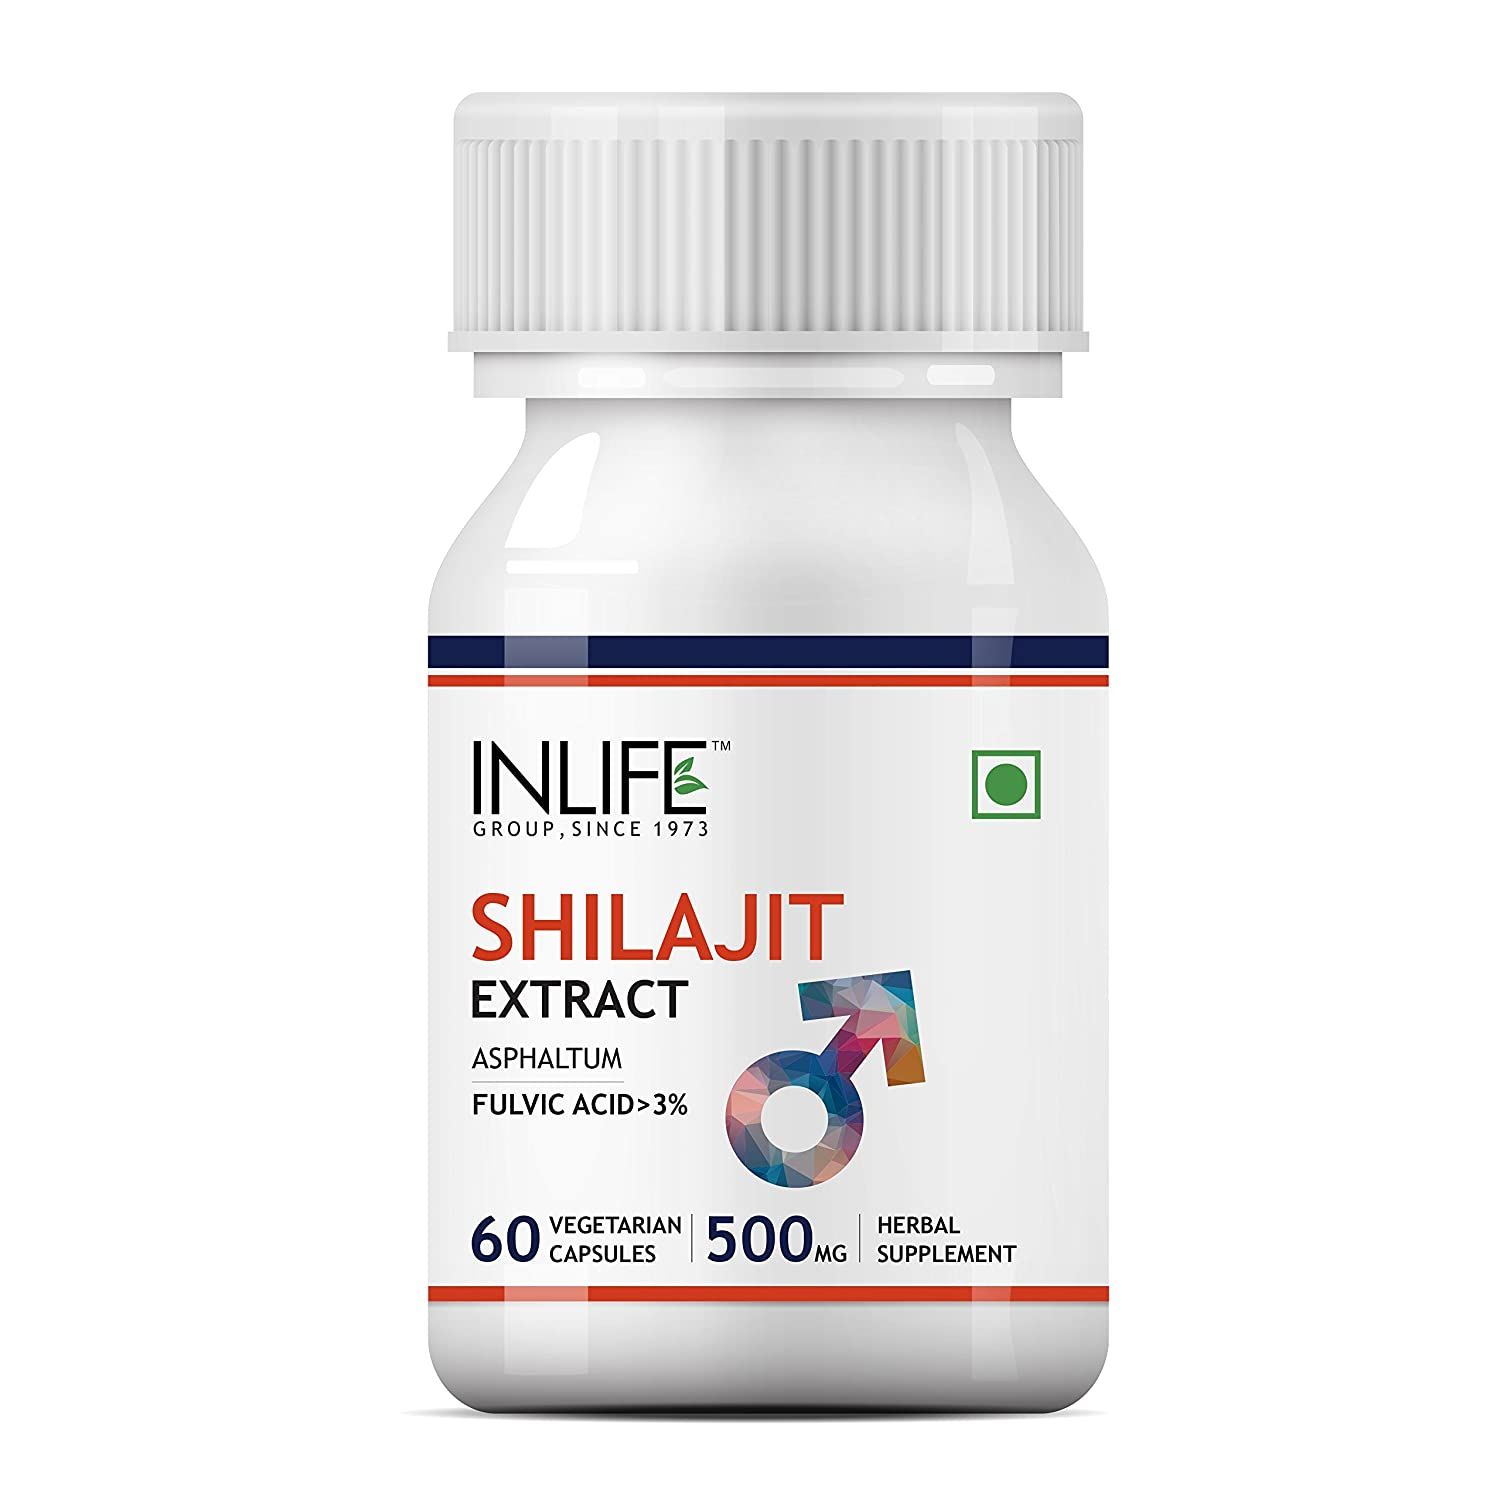 Inlife Shilajit Extract Capsules Image